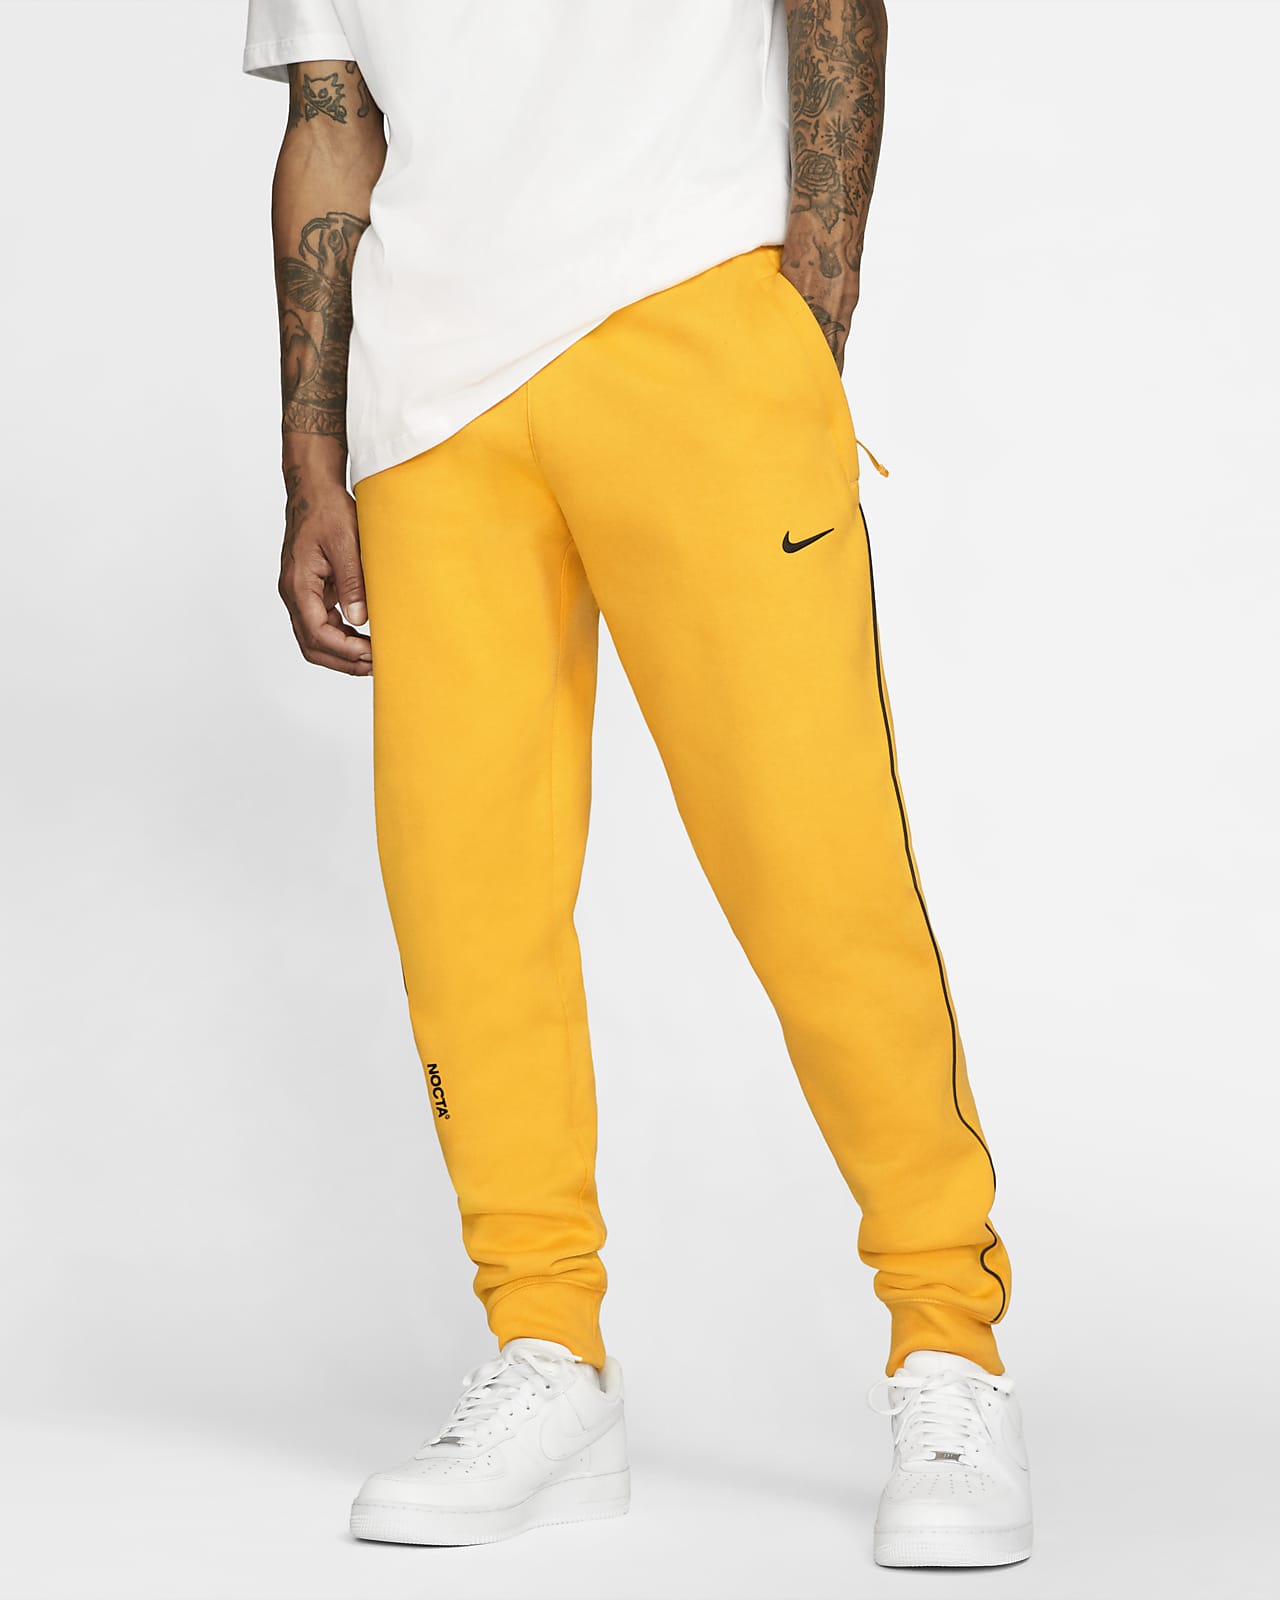 Drake Nike NOCTA University Gold Fleece Pants